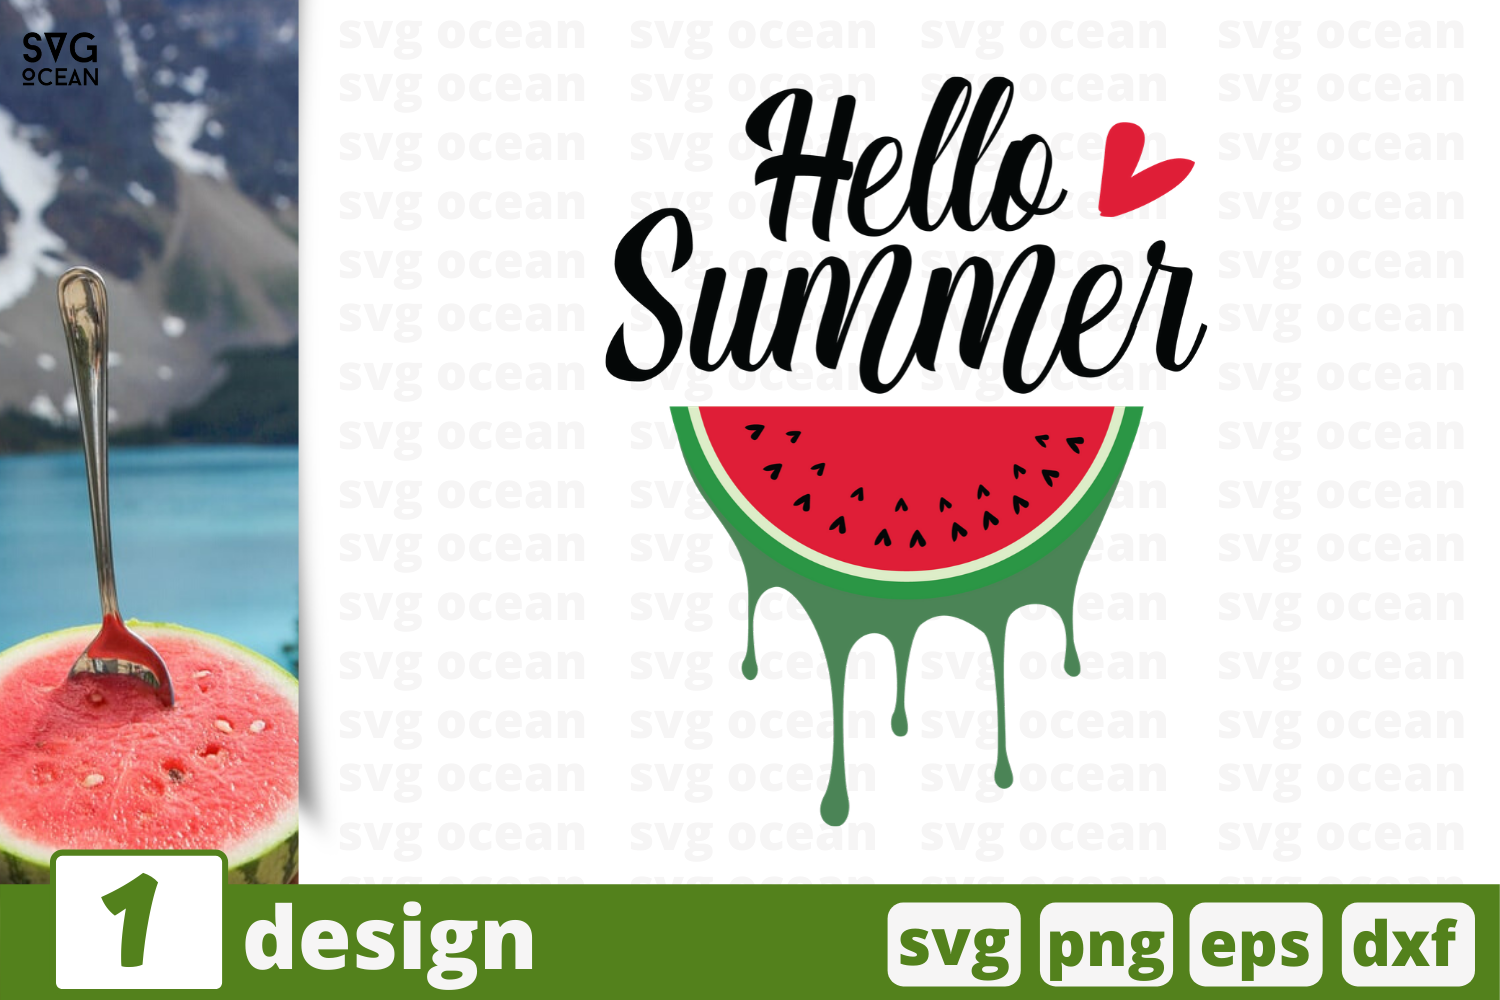 Download 1 Hello Summer Svg Bundle Watermelon Cricut Svg By Svgocean Thehungryjpeg Com